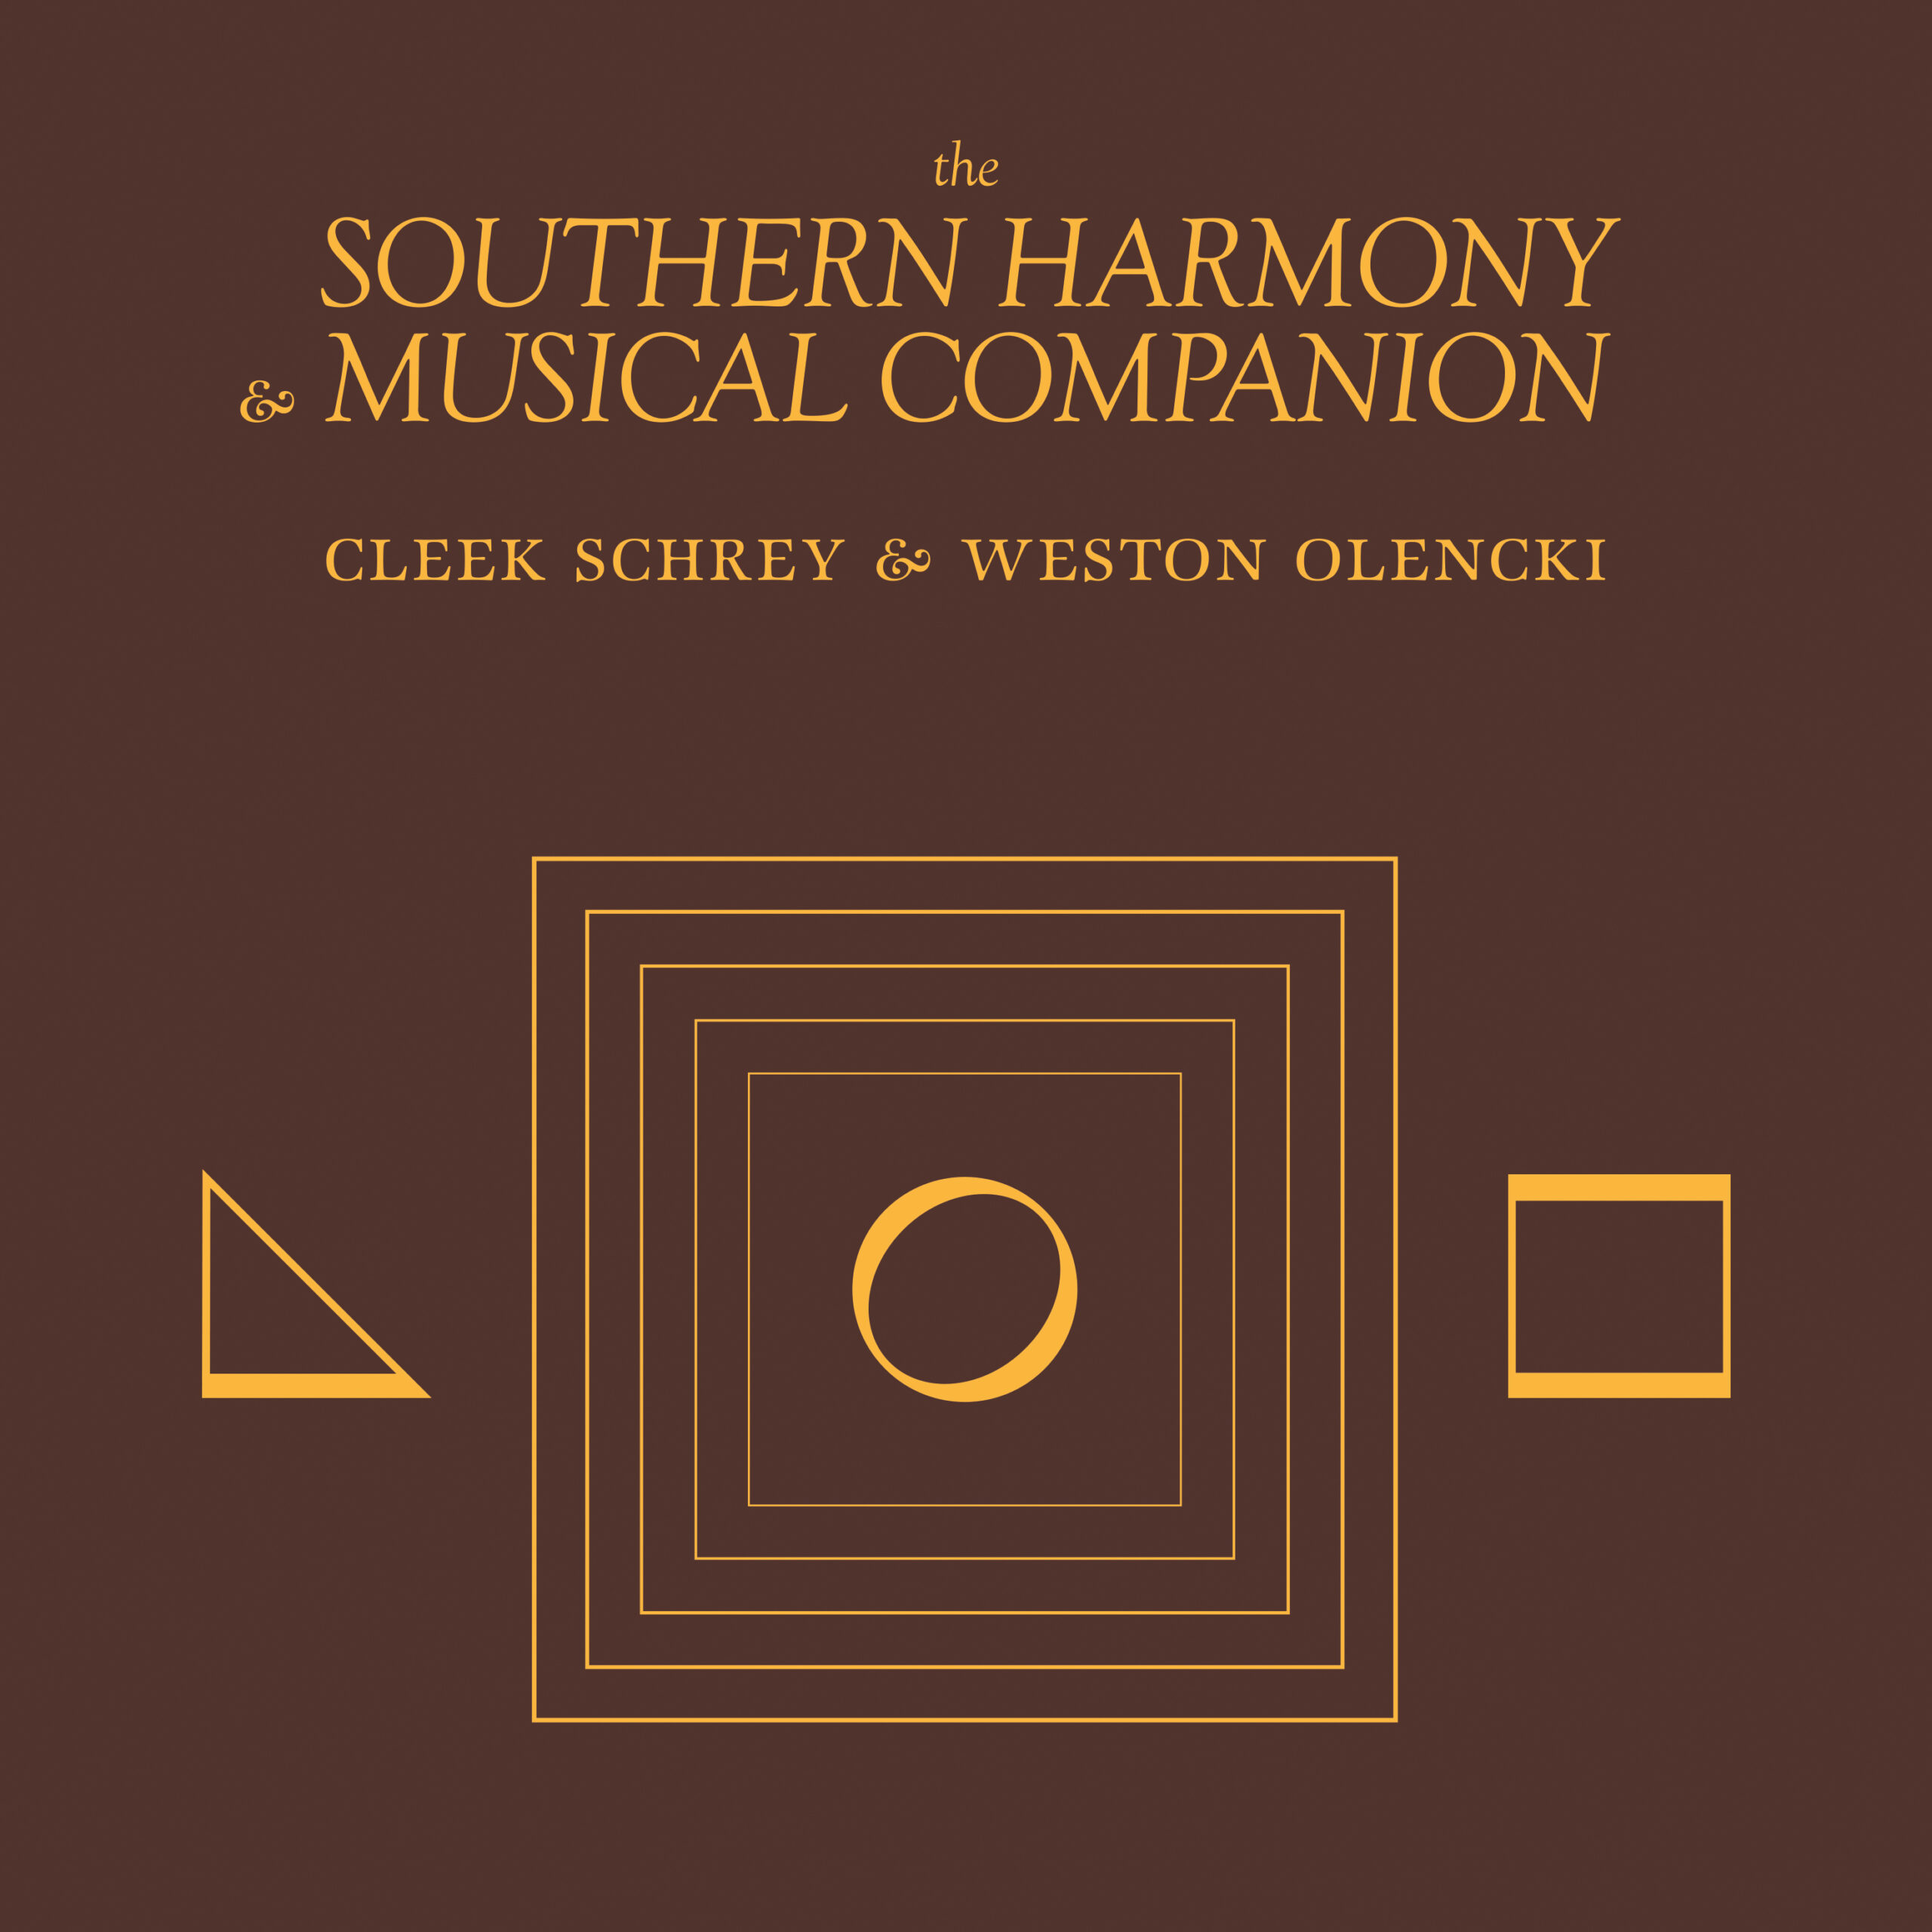 southern harmony album cover Cleek Schrey & Weston Olencki